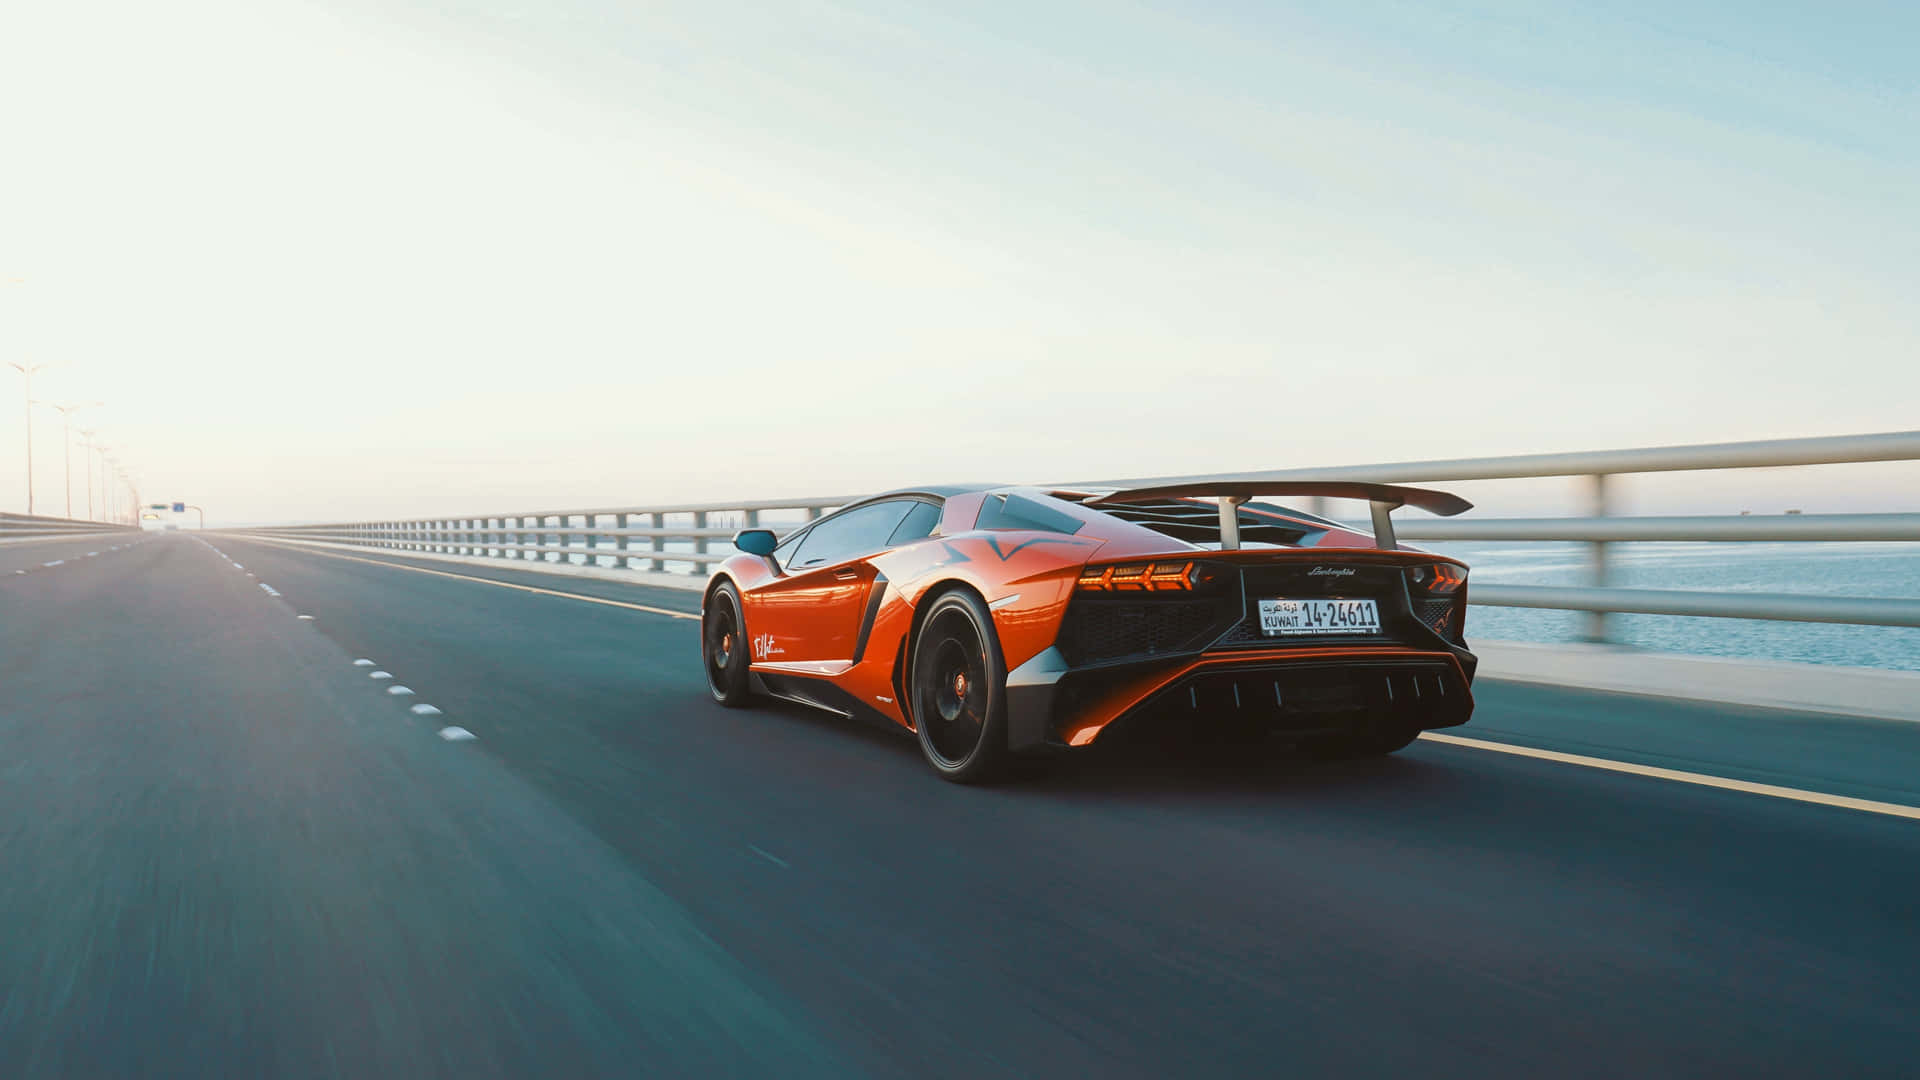 "Unleash the power of luxury with the legendary Lamborghini"